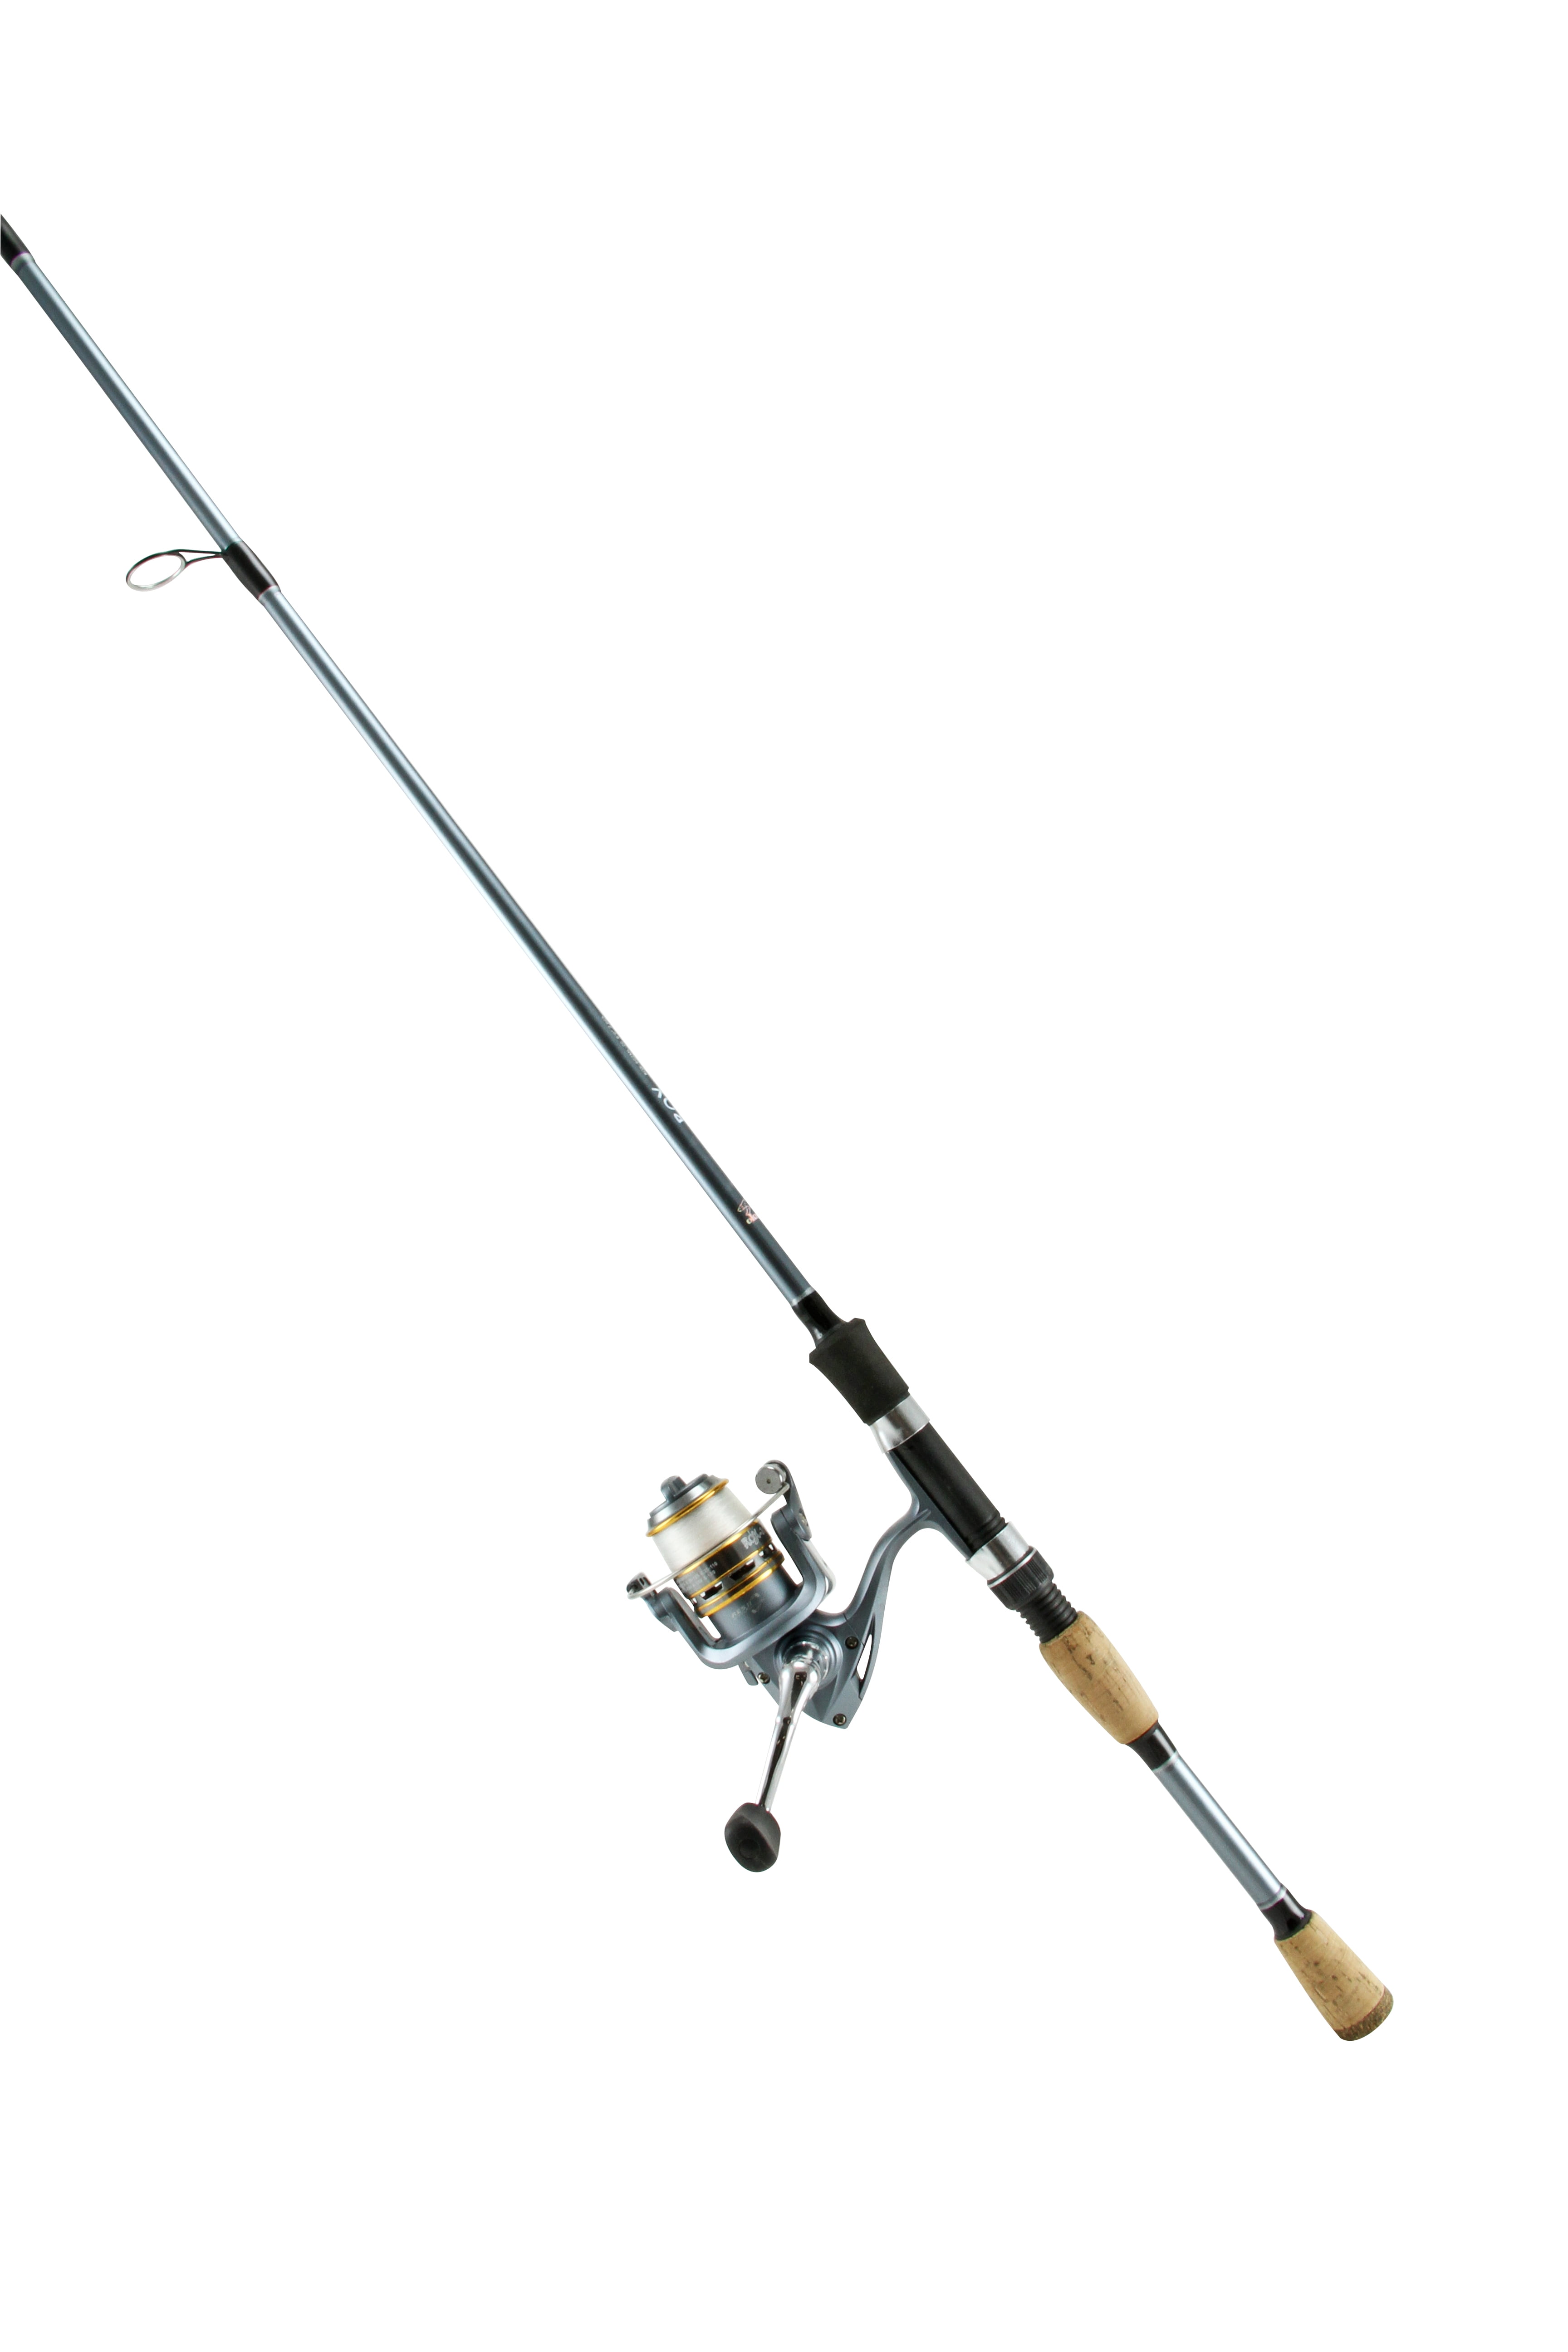 Okuma Fishing Rox 8 Medium Graphite Spinning Rod and Reel Combo 